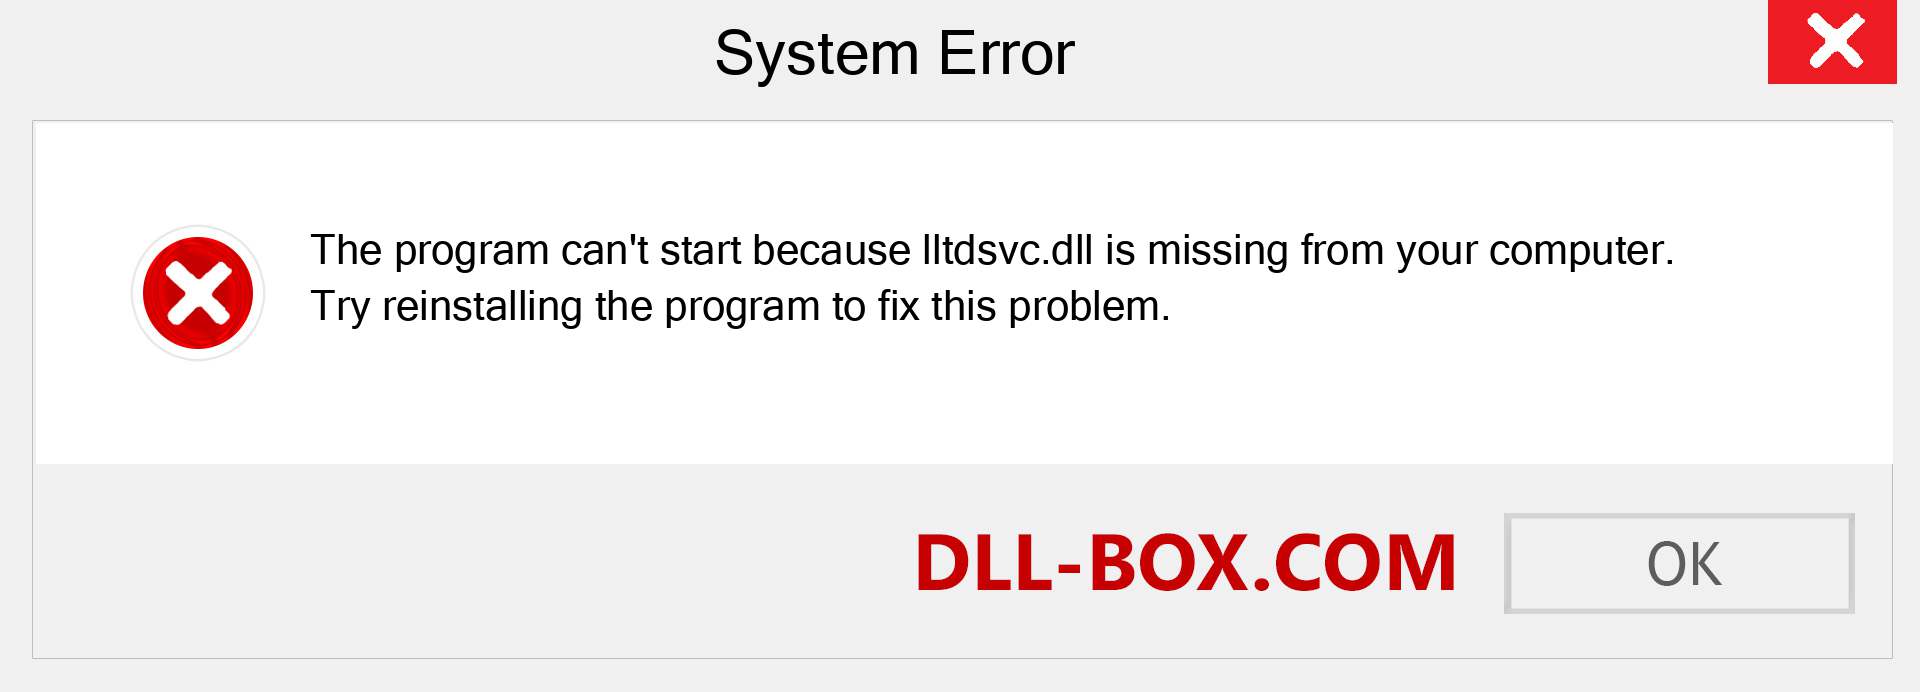  lltdsvc.dll file is missing?. Download for Windows 7, 8, 10 - Fix  lltdsvc dll Missing Error on Windows, photos, images